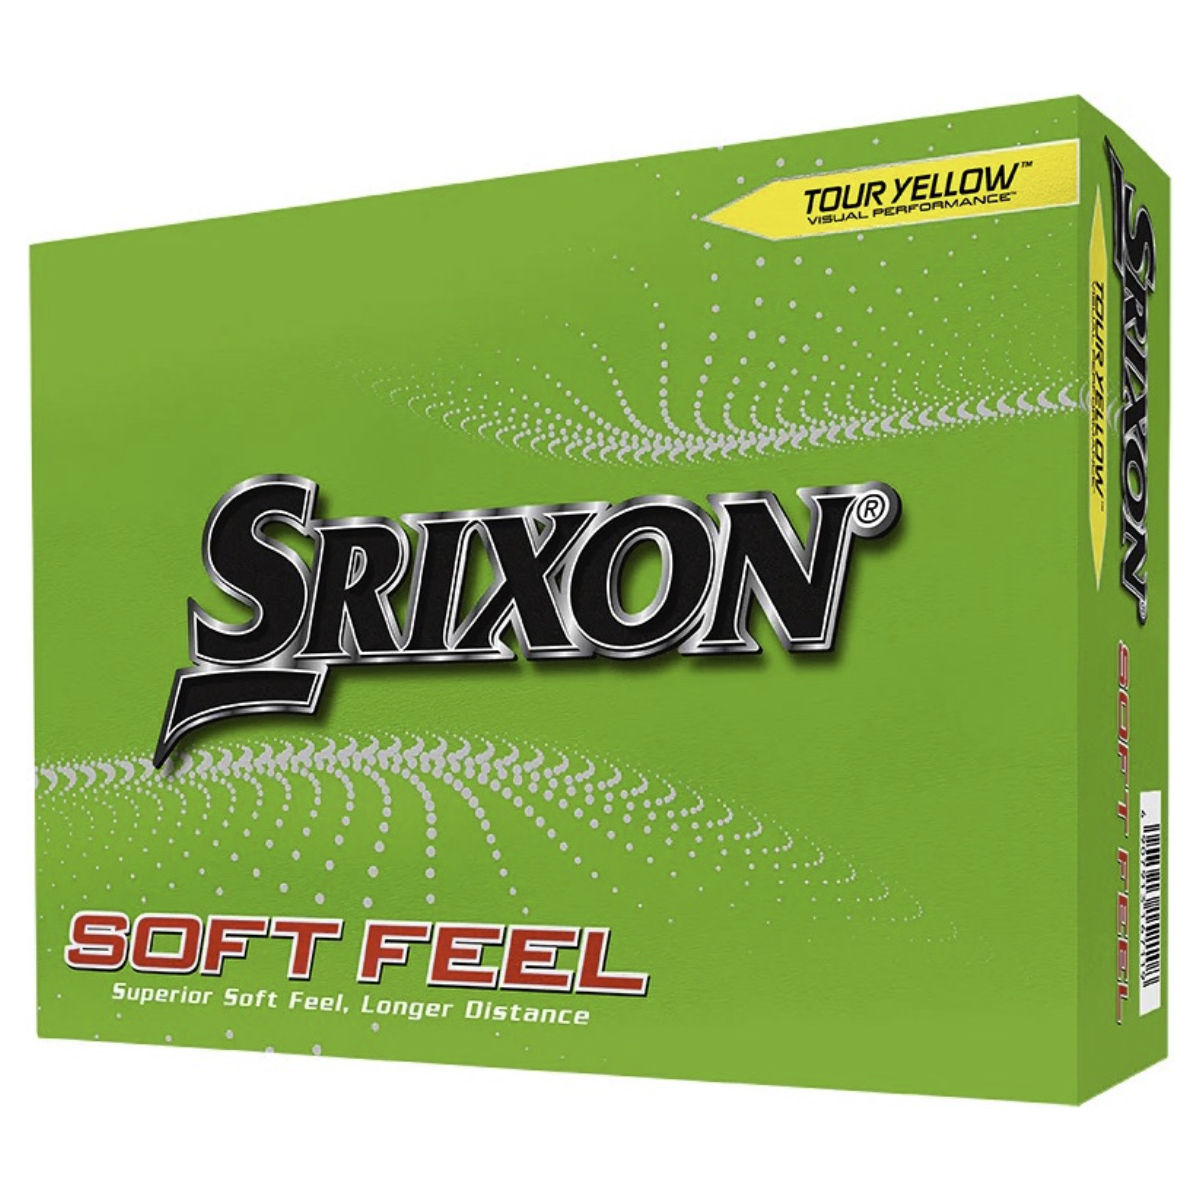 Srixon Soft Feel 23 Tour Yellow